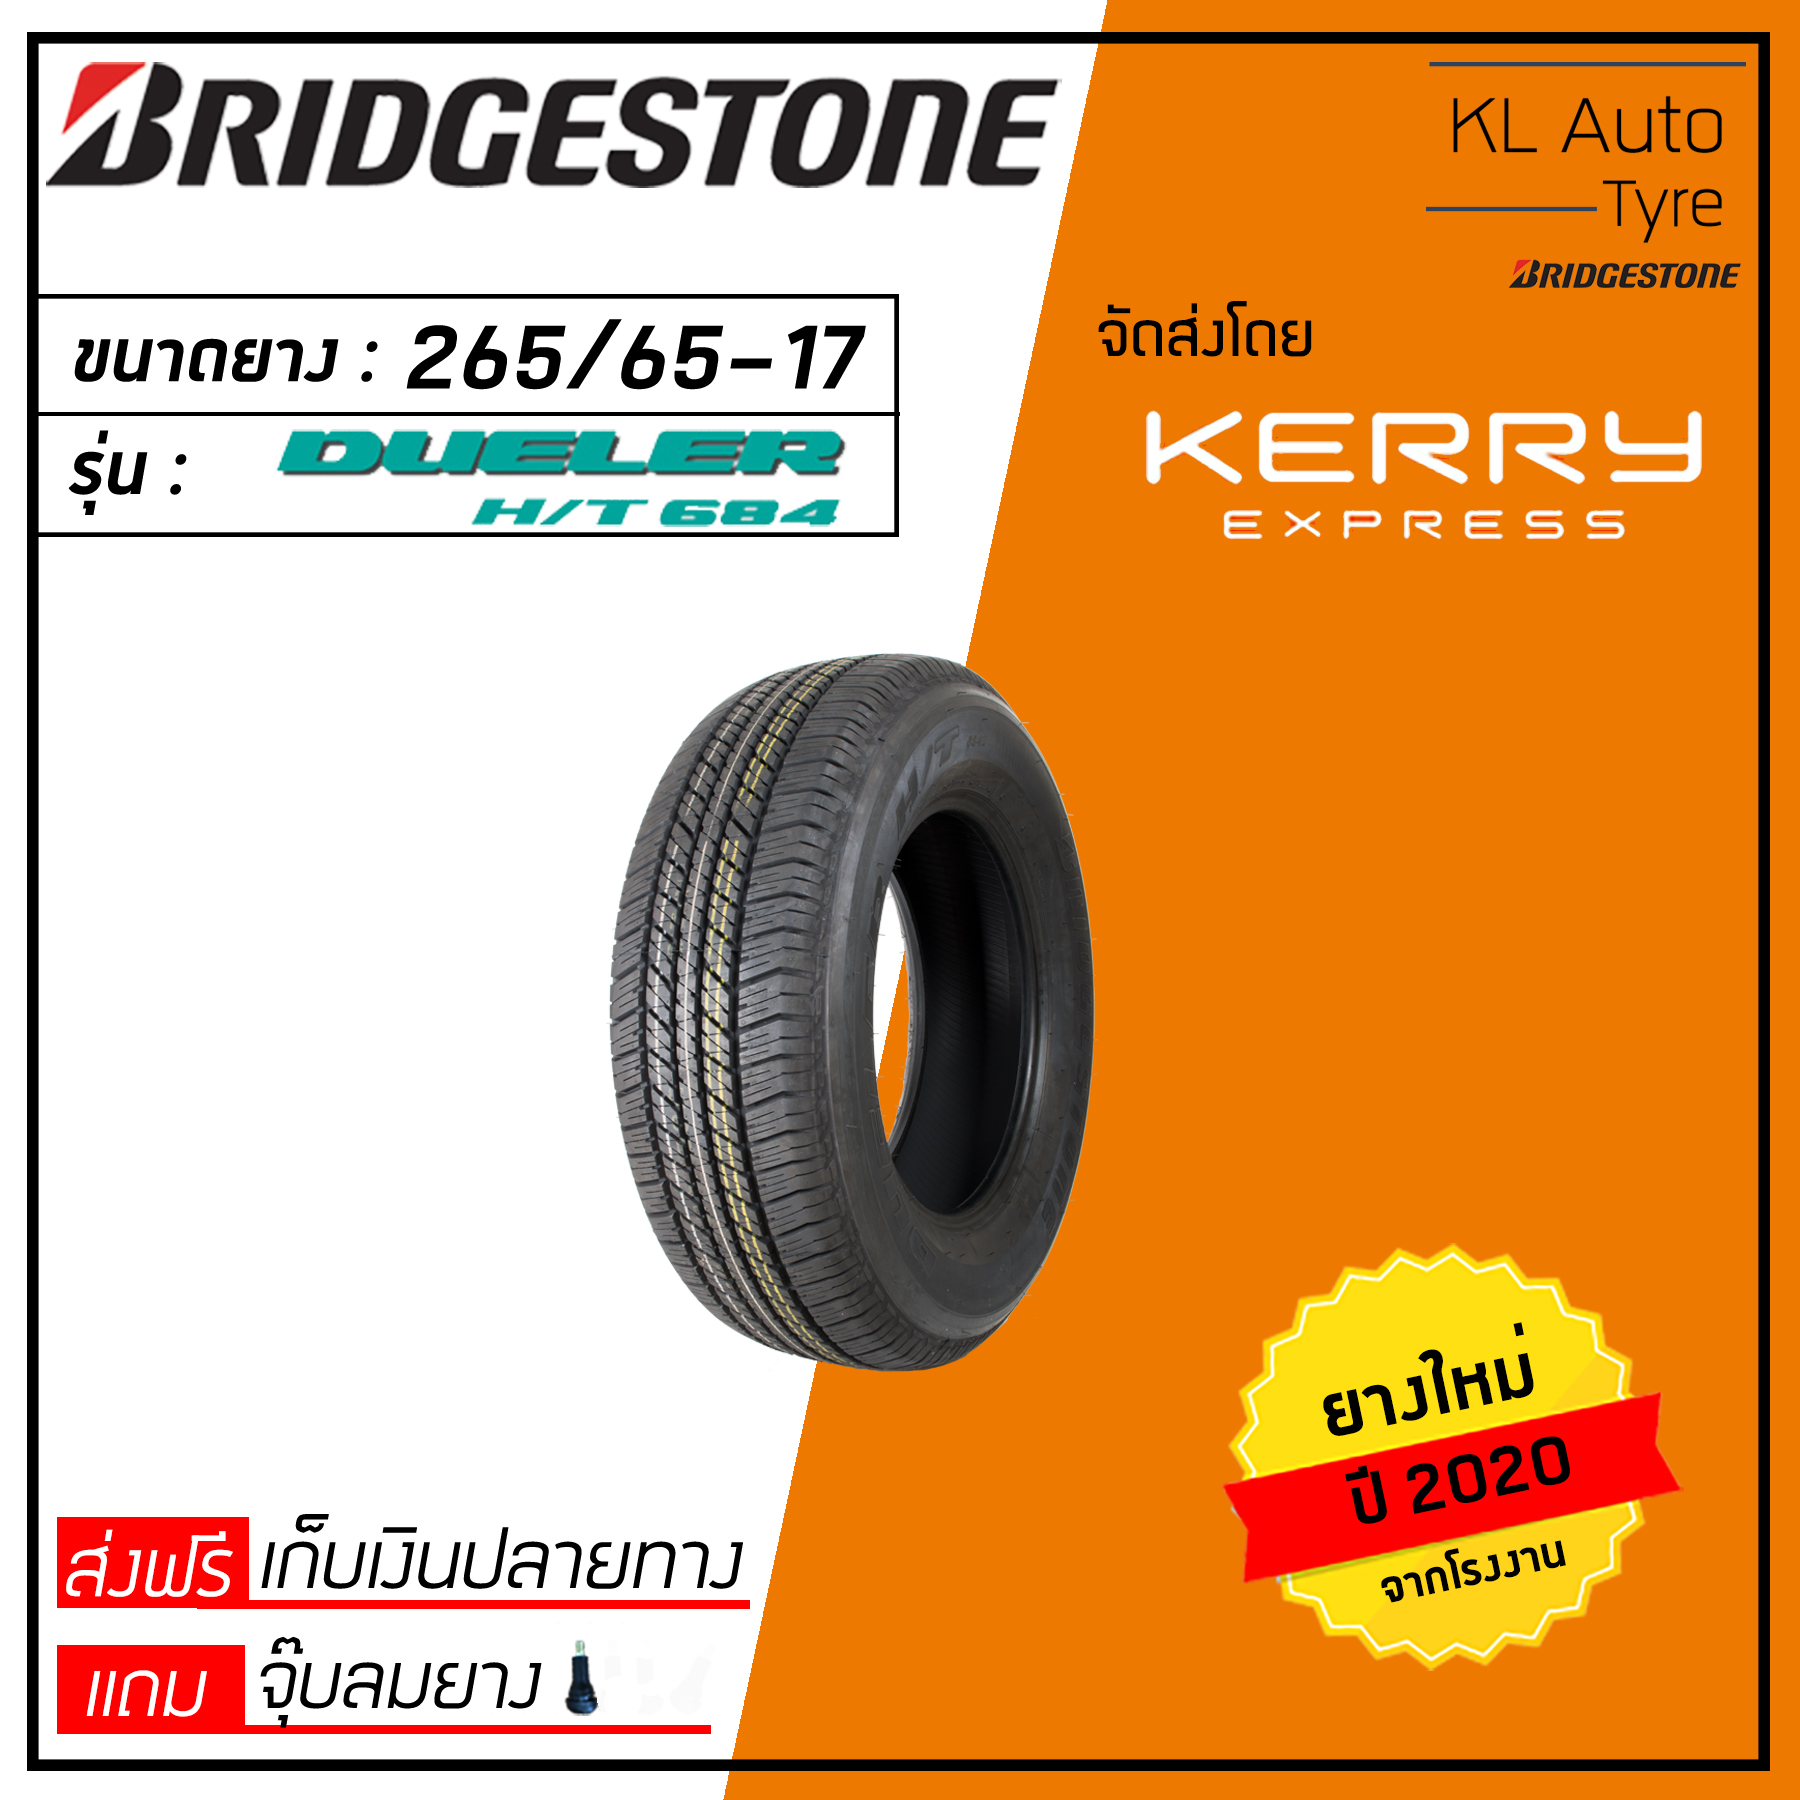 Bridgestone 265/65-17 D684 1 เส้น ปี 21 (ฟรี จุ๊บยาง 1 ตัว มูลค่า 50 บาท)